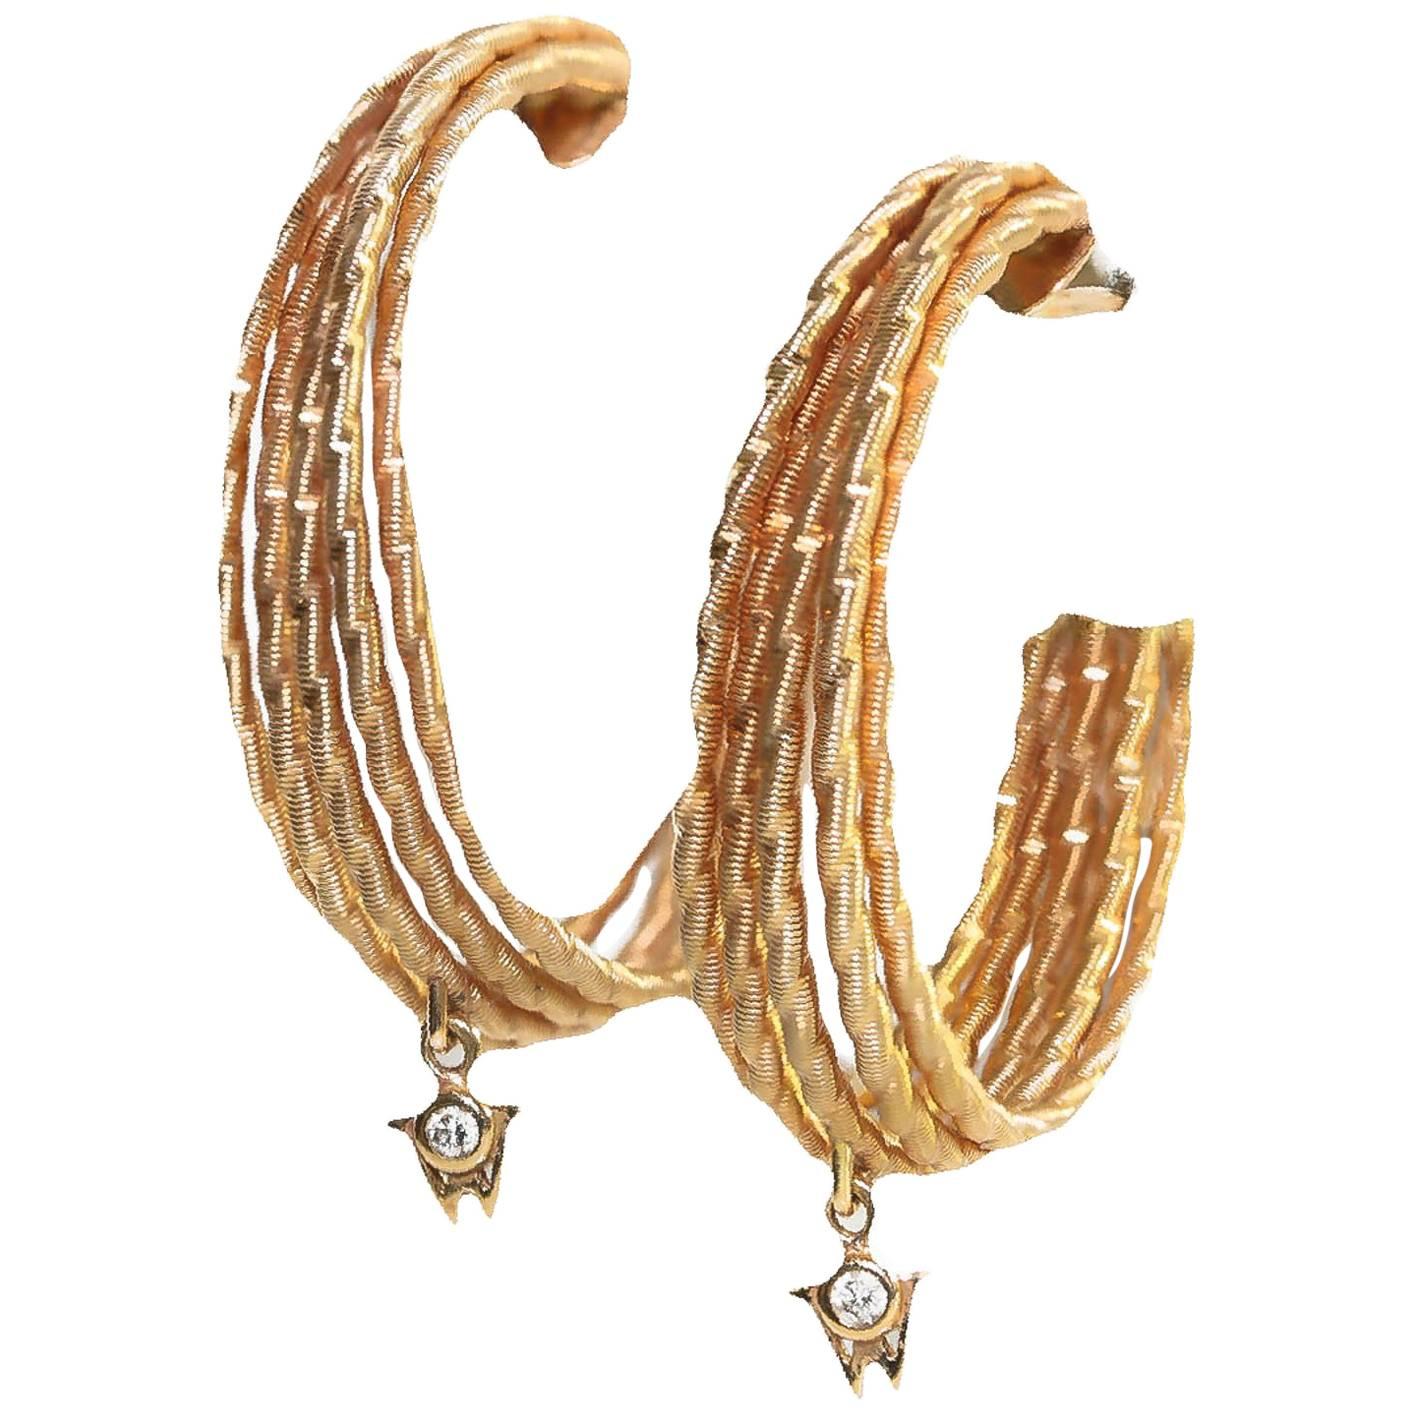 Wellendorff Brilliance of the Sun 18K yellow gold hoop earrings. Each Wellendorff logo is set with a small diamond.
Retail $ 9,200.00